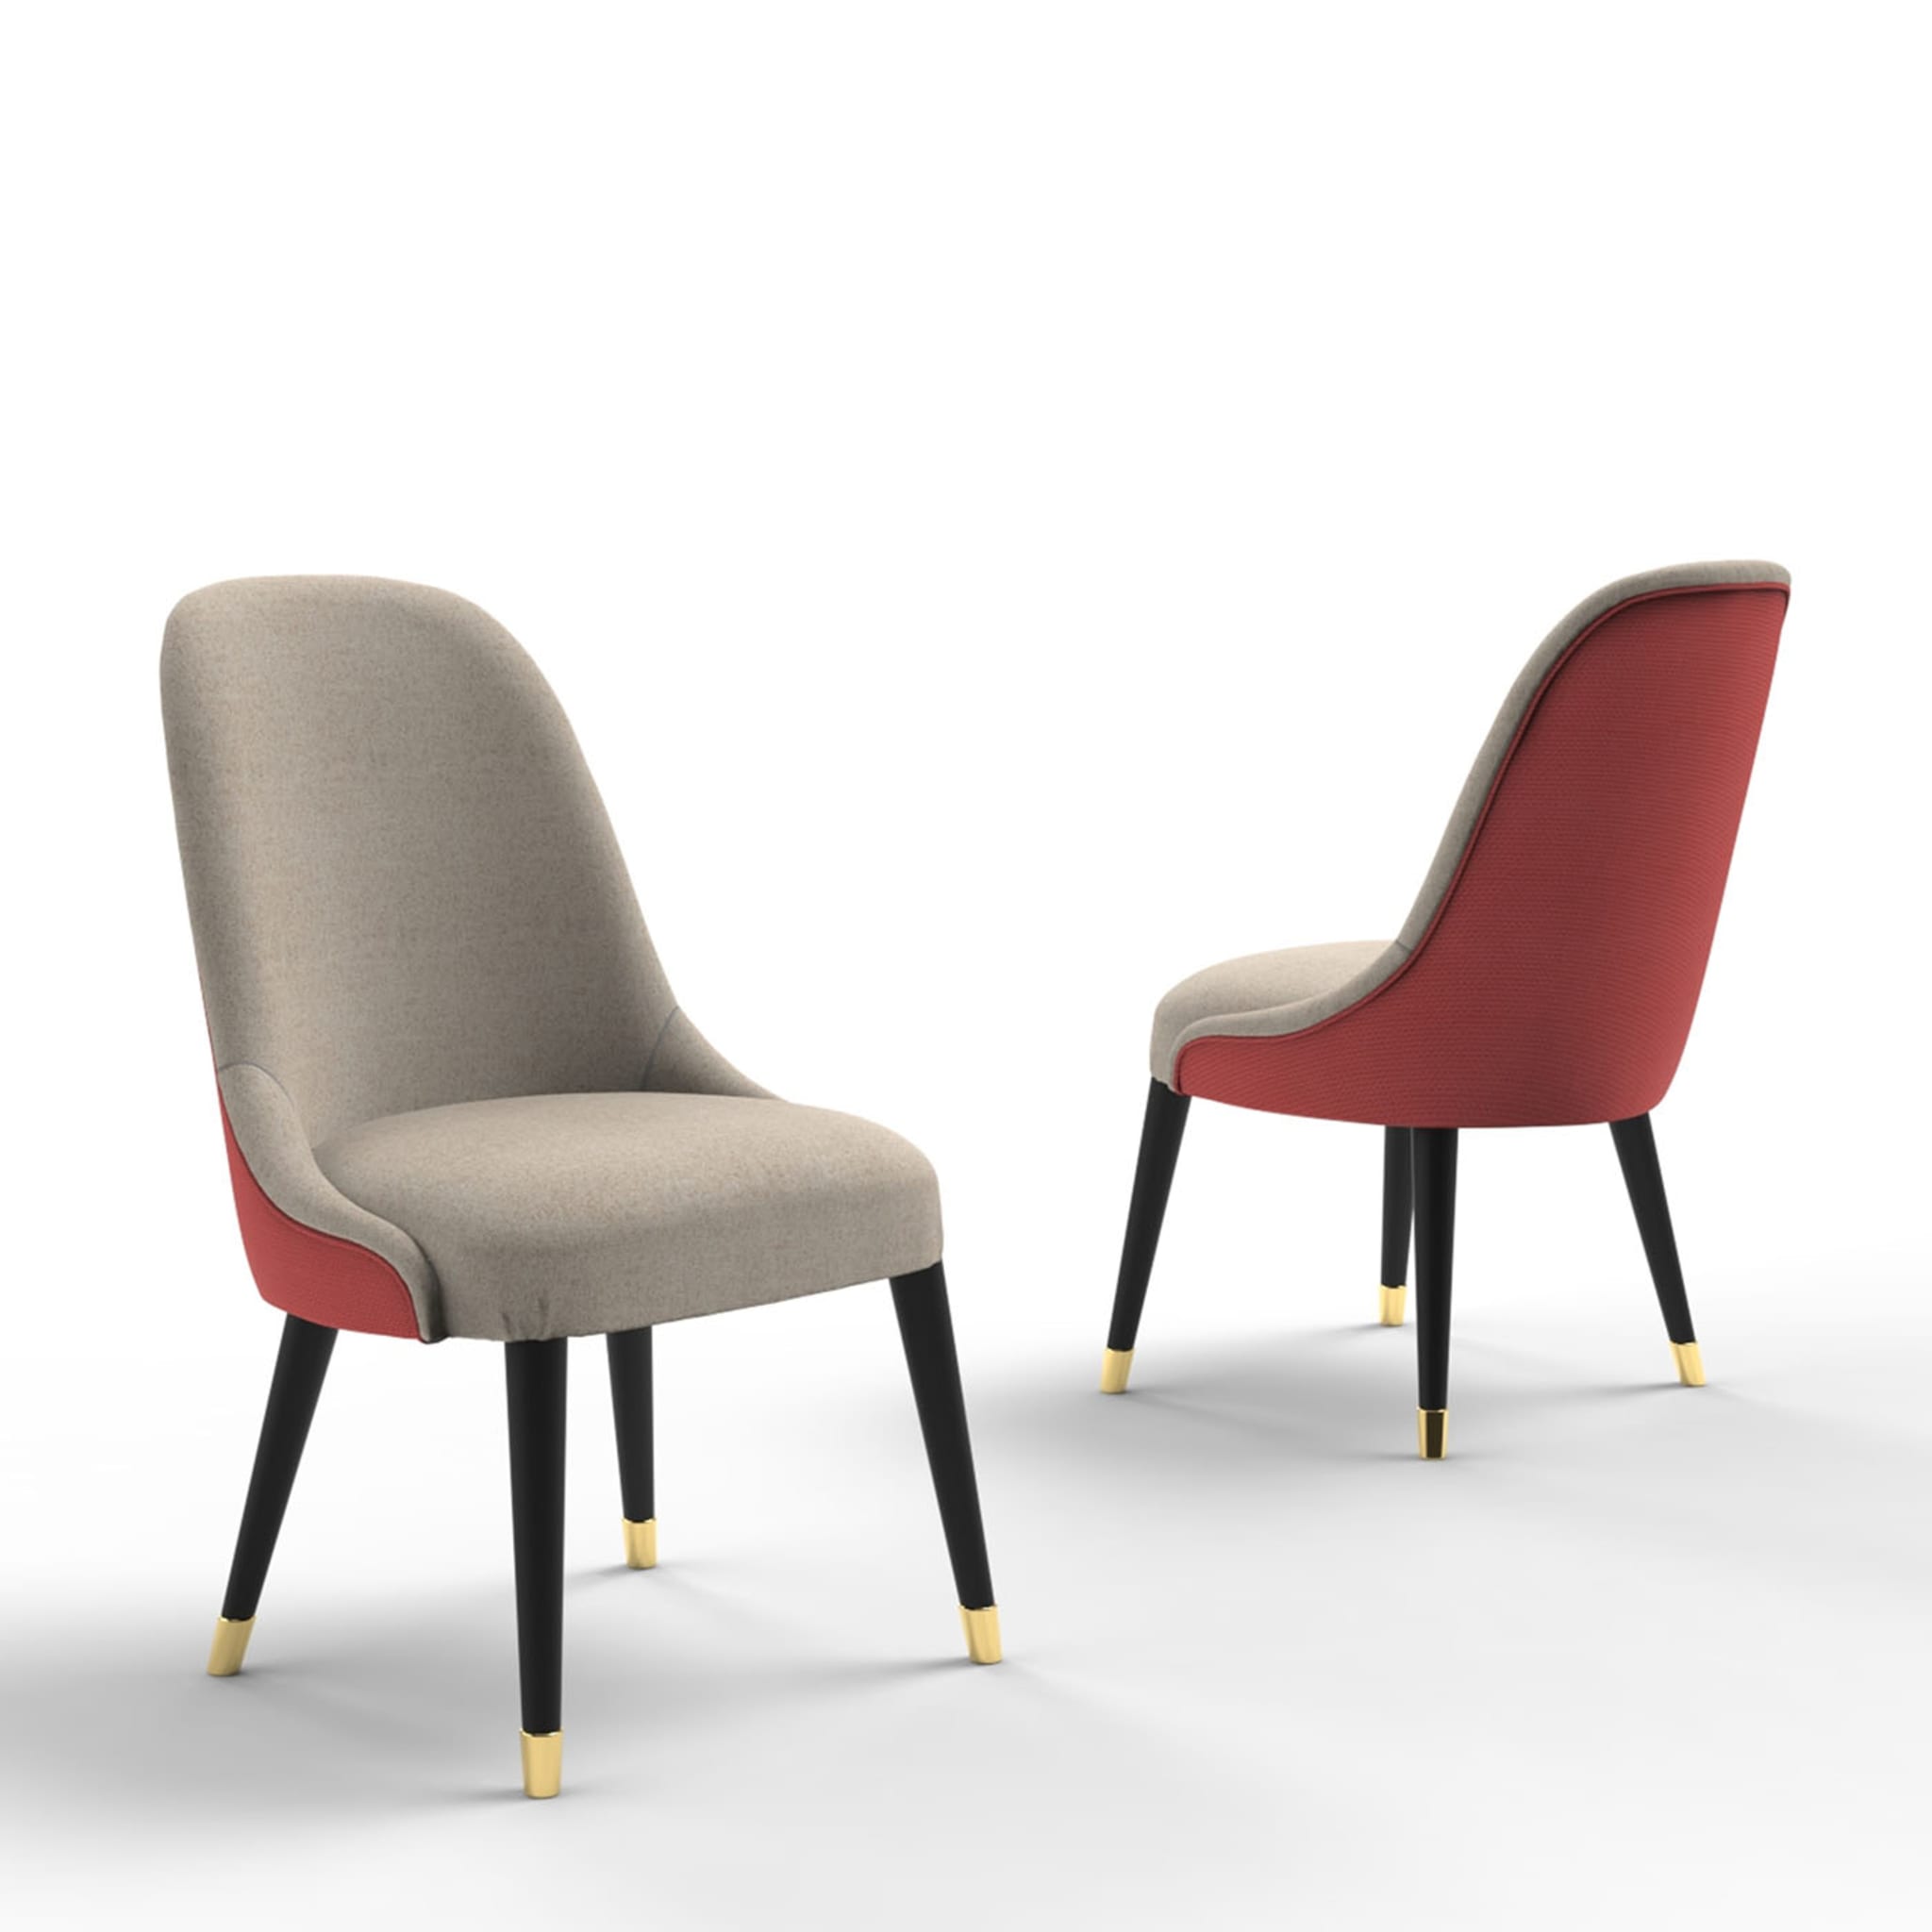 Gwenda Gray & Coral Chair - Alternative view 1